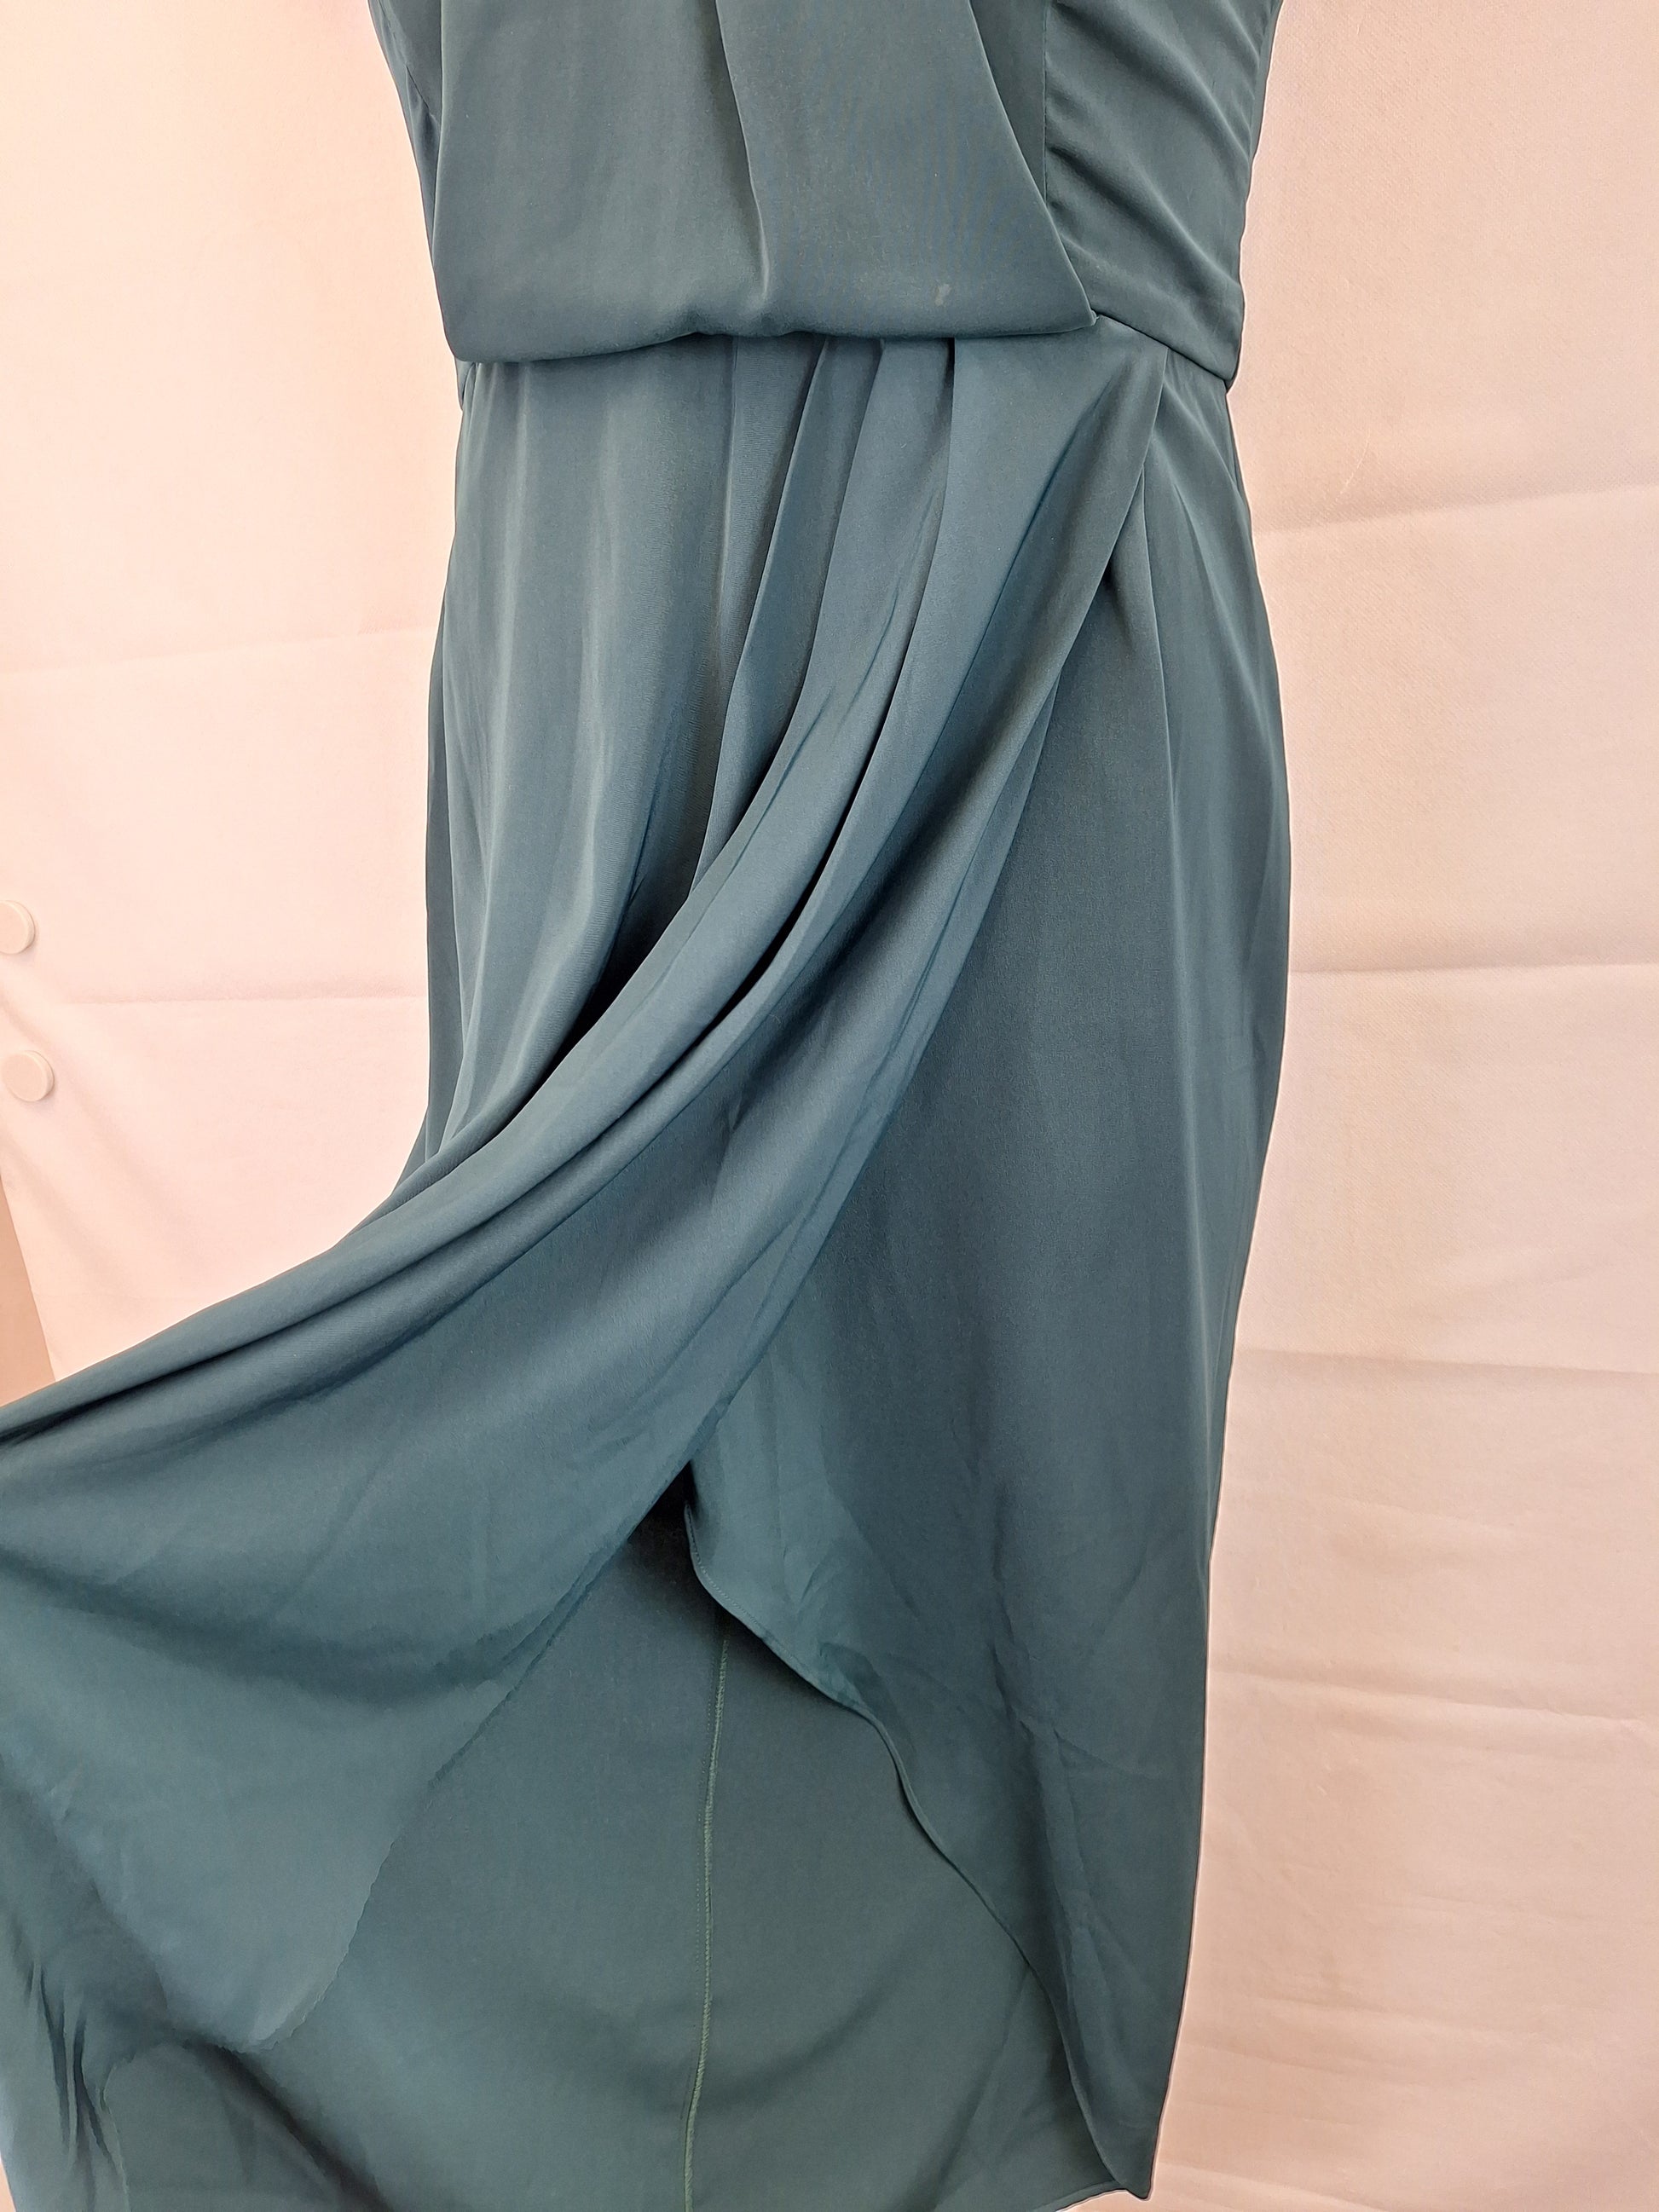 Shona Joy Emerald Knot Drape Midi Dress Size 12 by SwapUp-Online Second Hand Store-Online Thrift Store